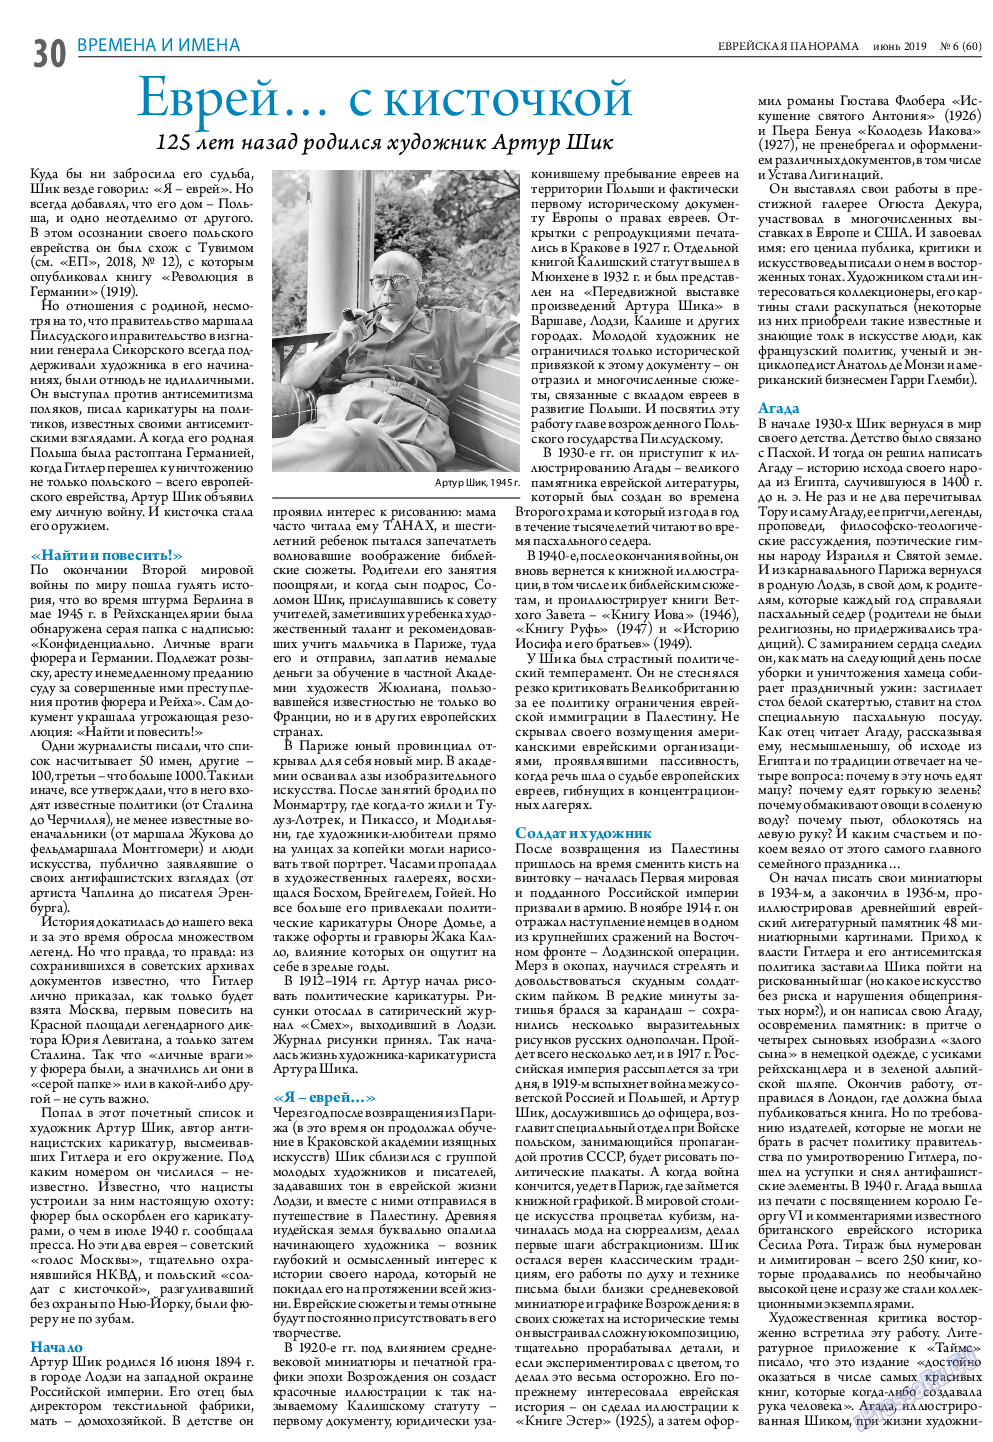 Еврейская панорама, газета. 2019 №6 стр.30